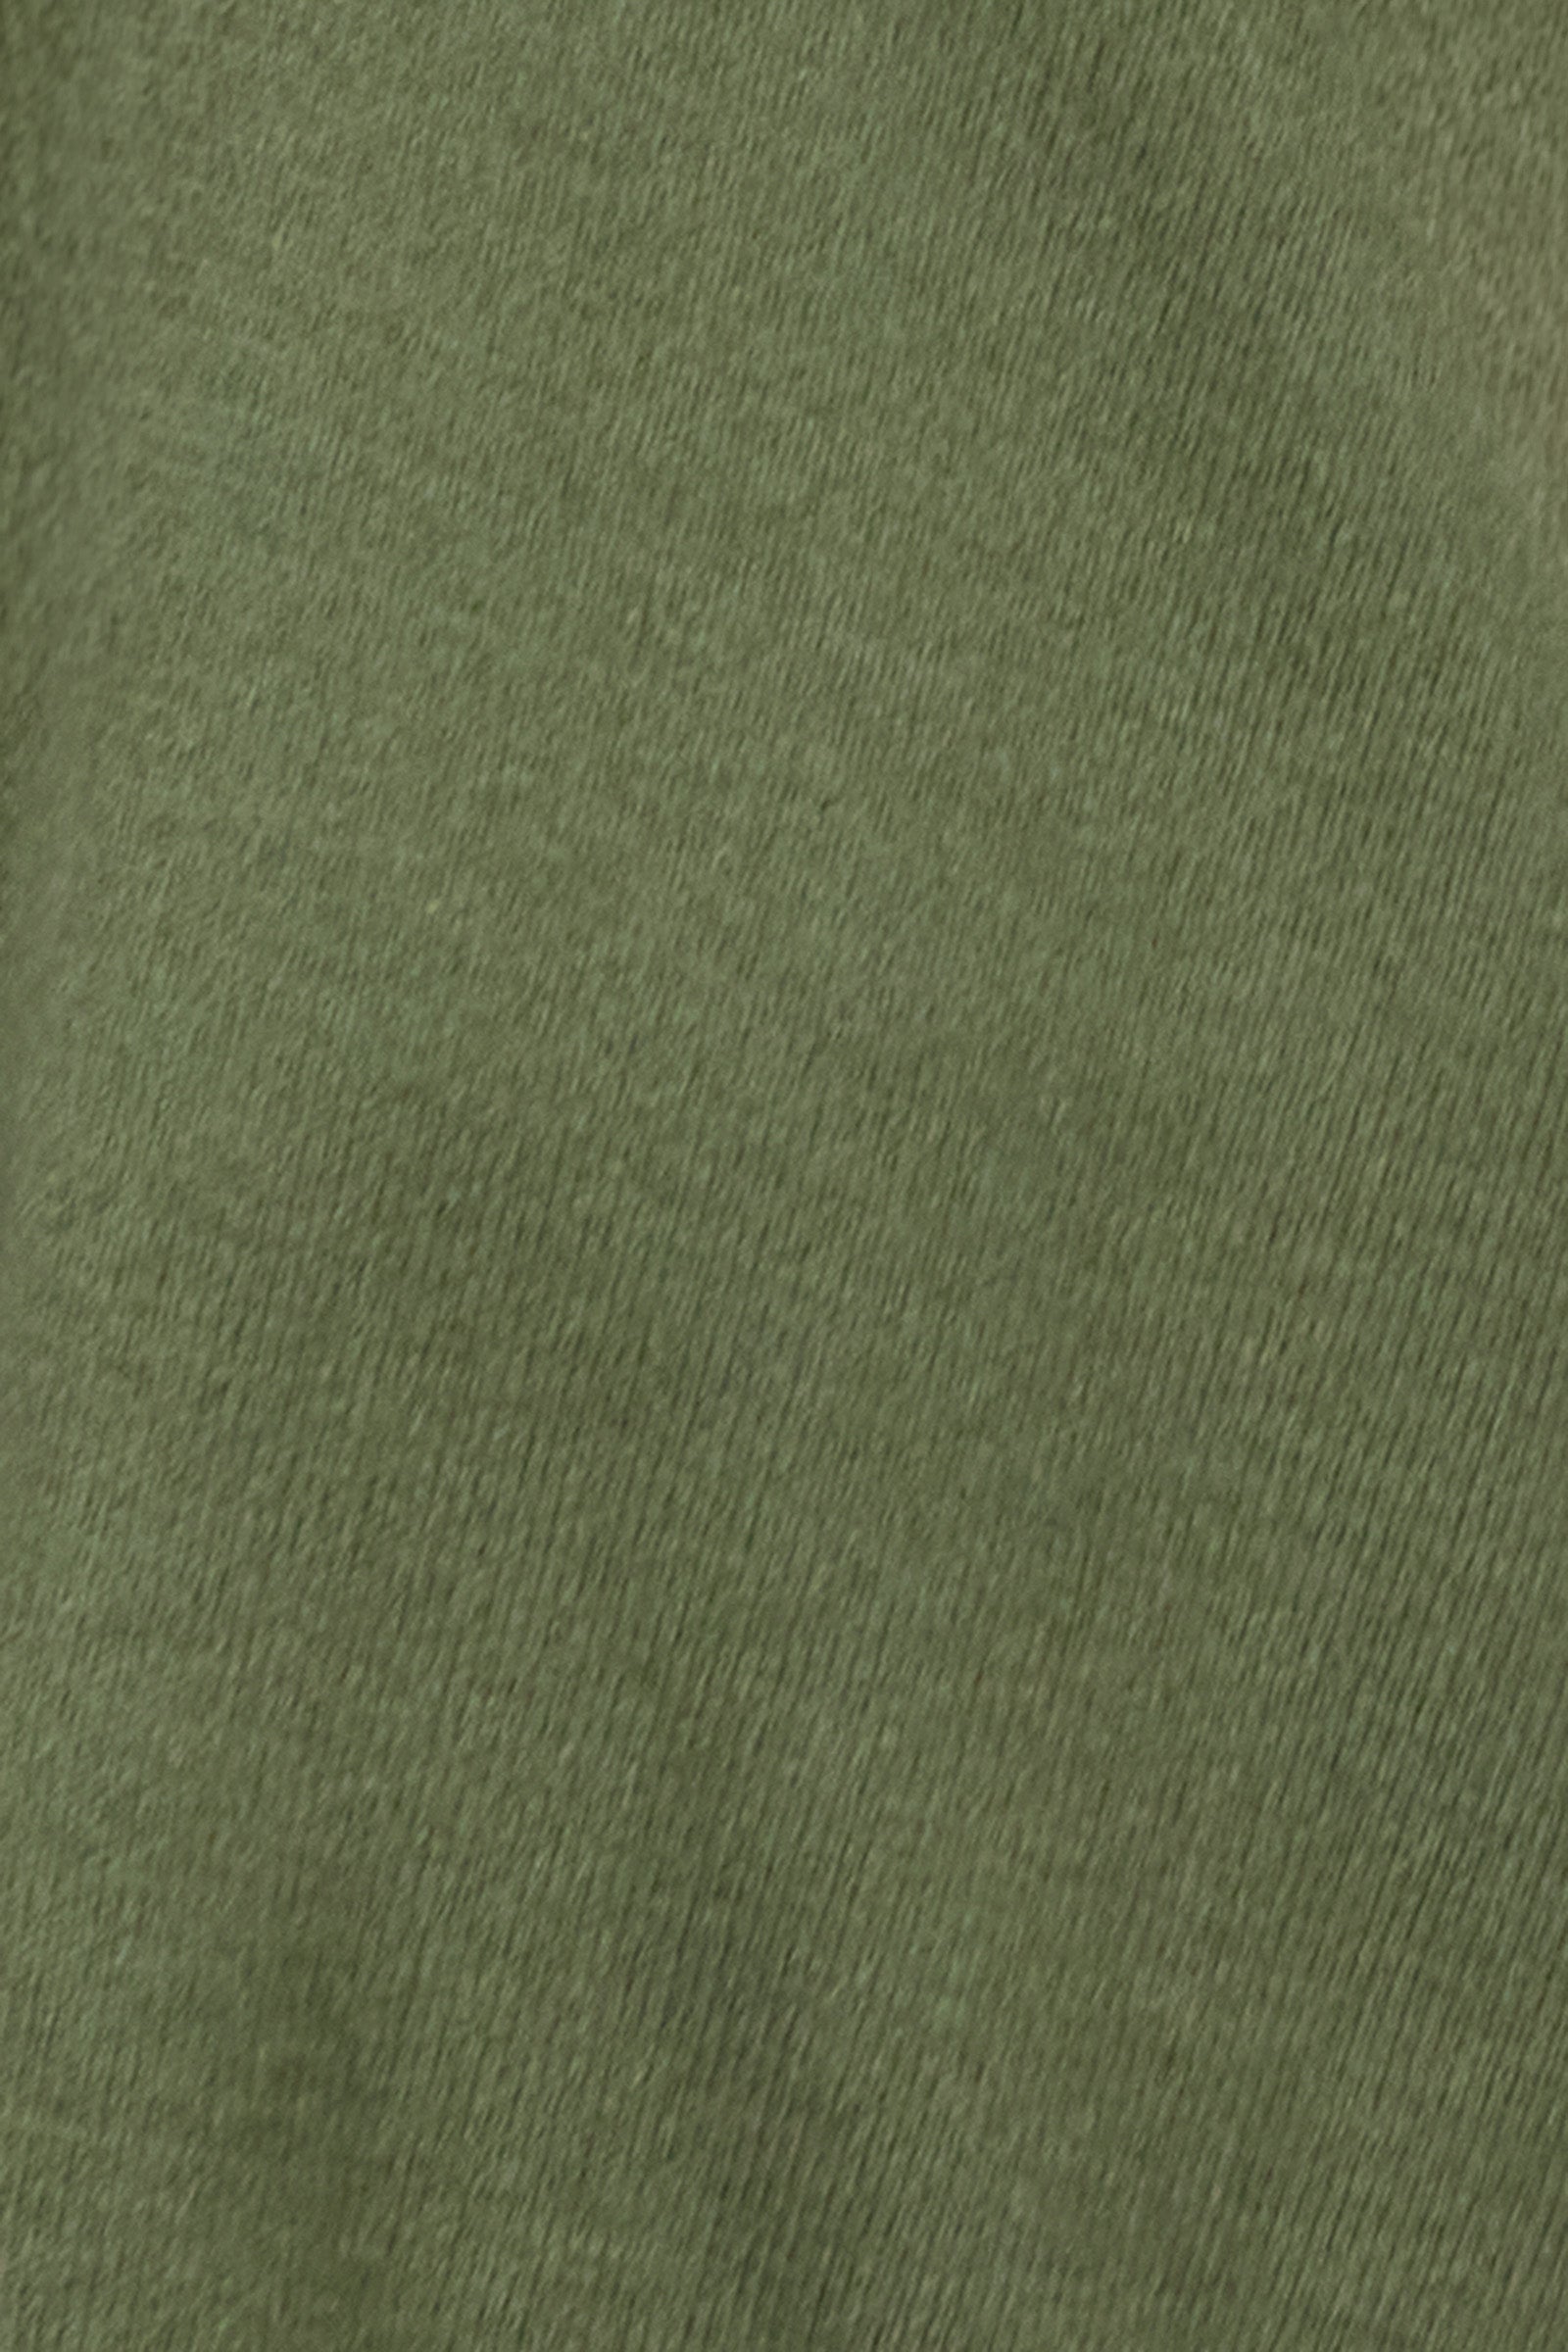 Nakako Pocket Cardigan - Moss - eb&ive Clothing - Knit Cardigan Short